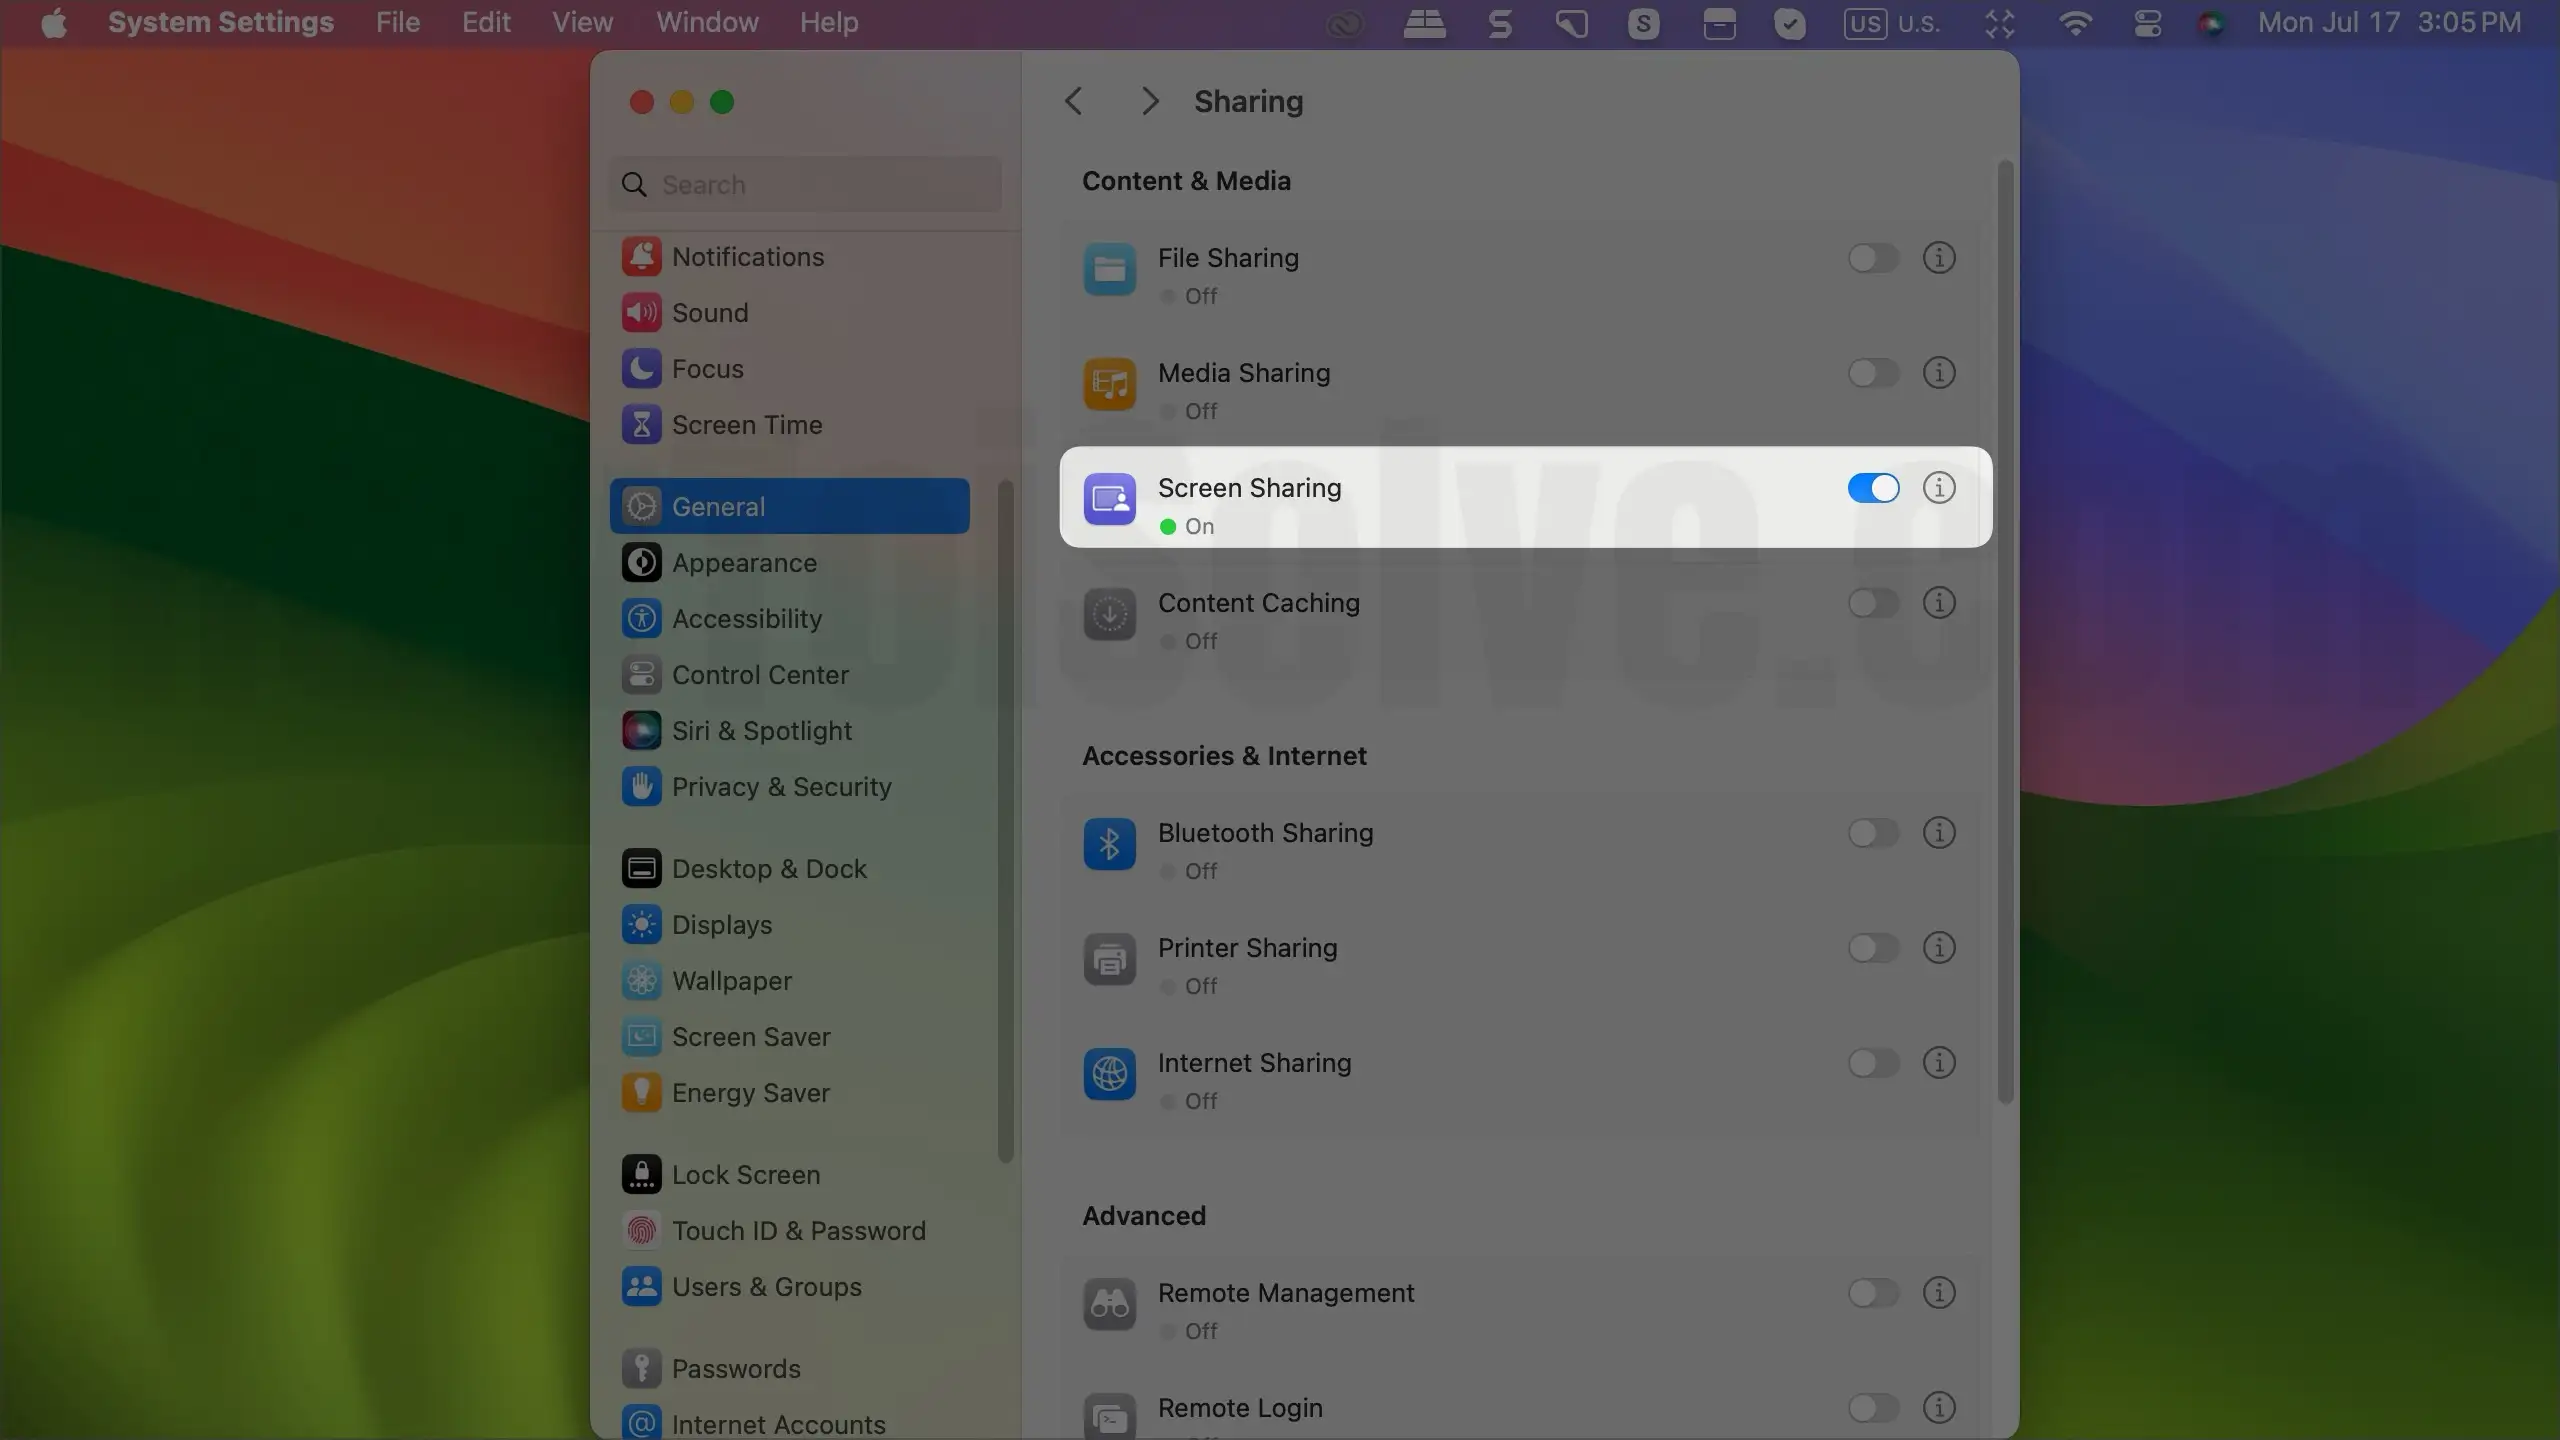 Enable Screen Sharing on Mac